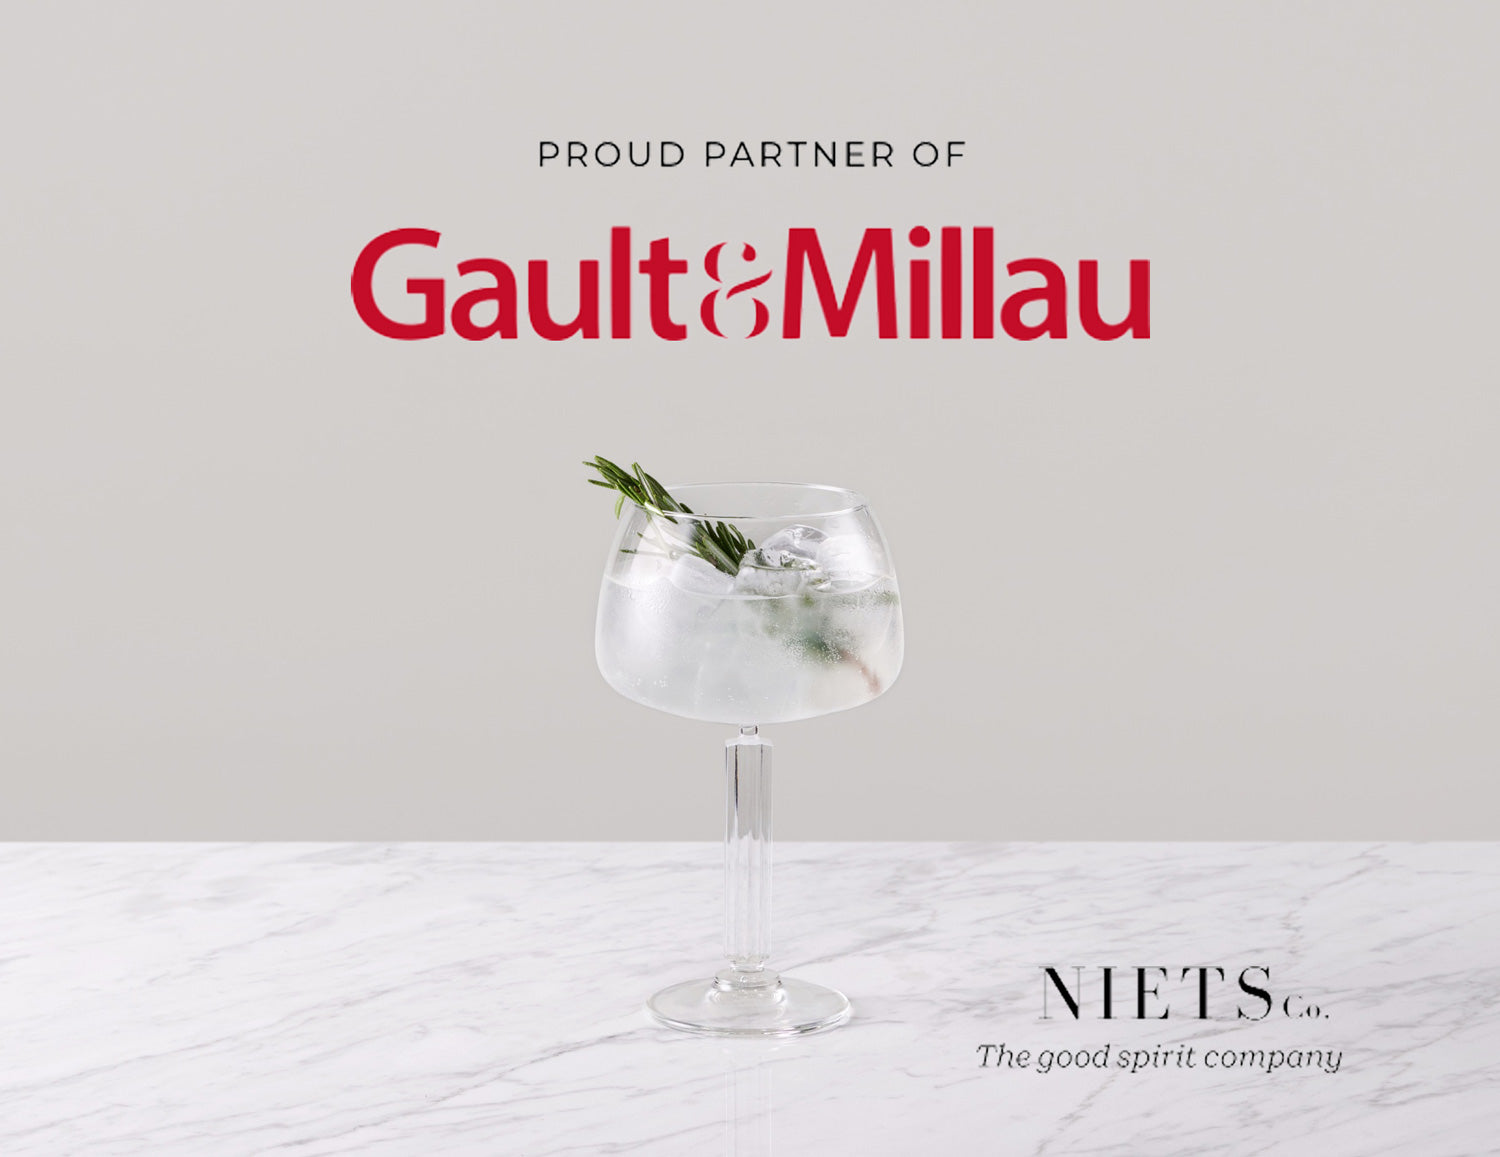 Niets official partner of Gault&Millau